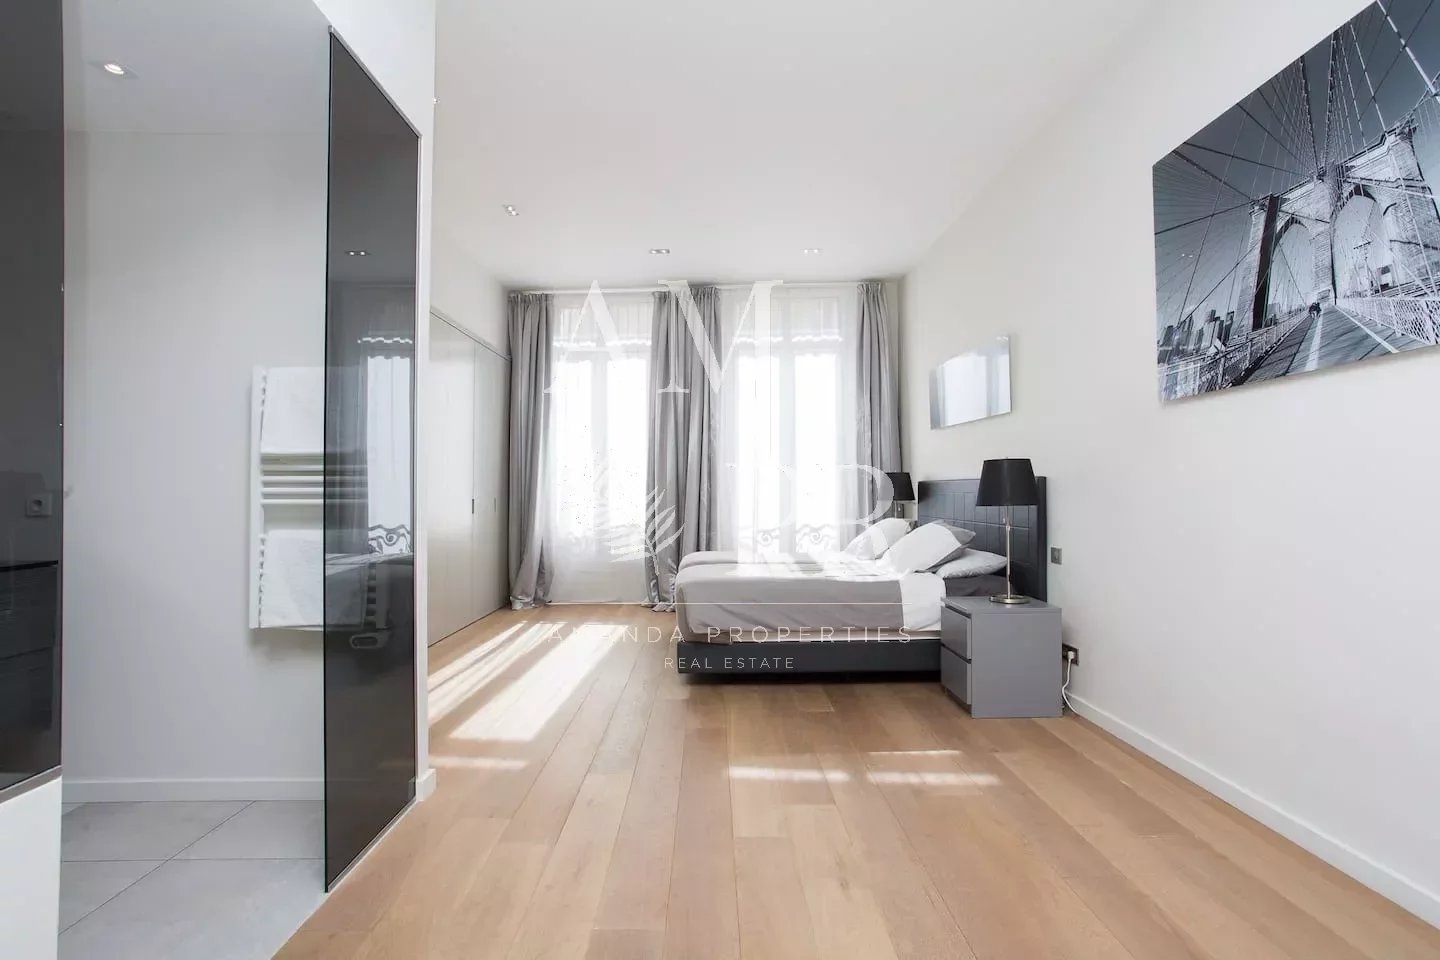 Beautiful 5-room flat 150m² - Cannes city center